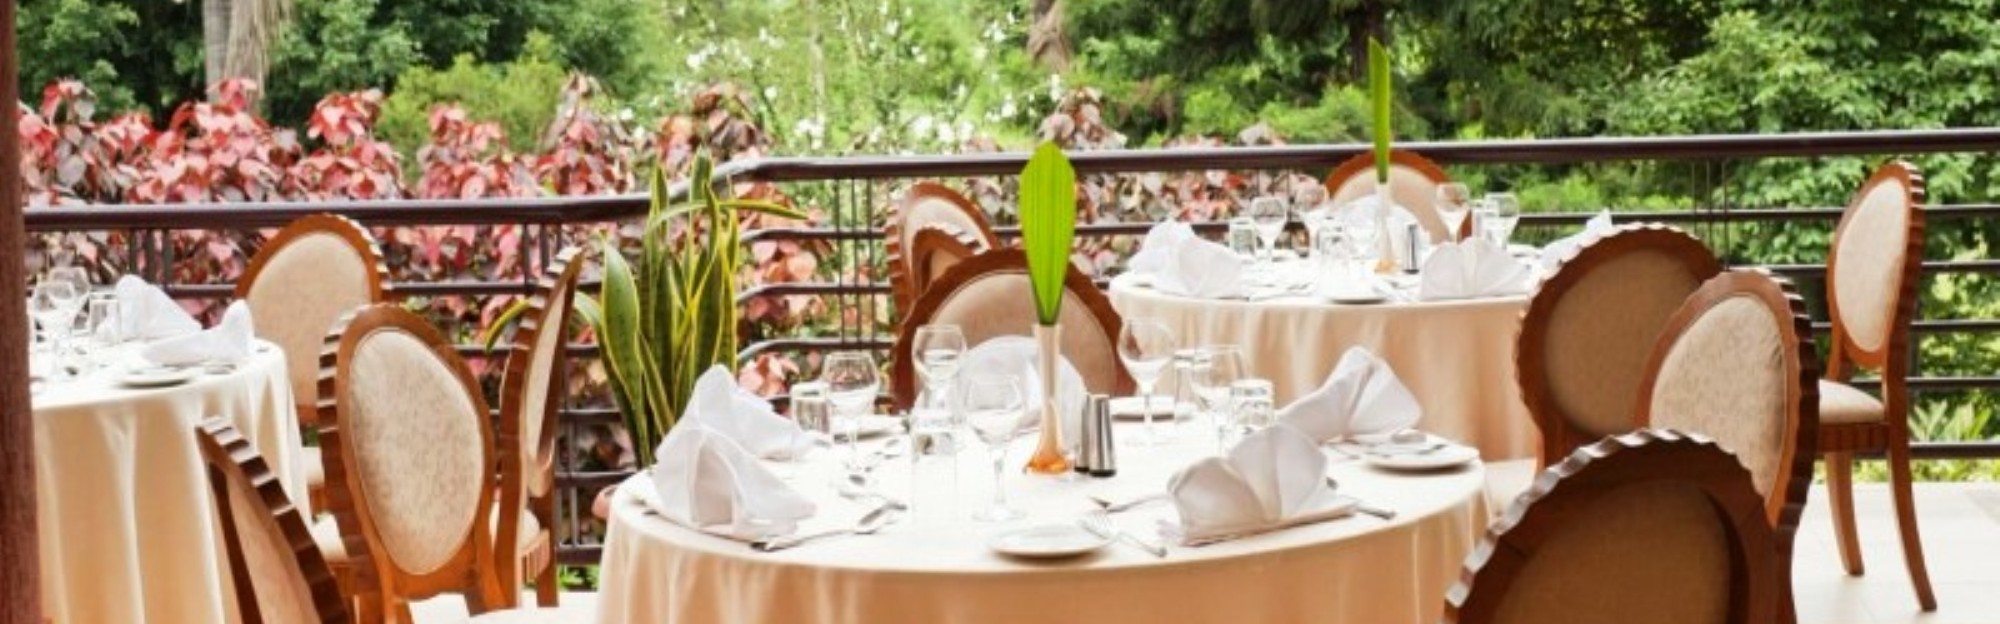 Mbale Resort Hotel Weddings & Conferences